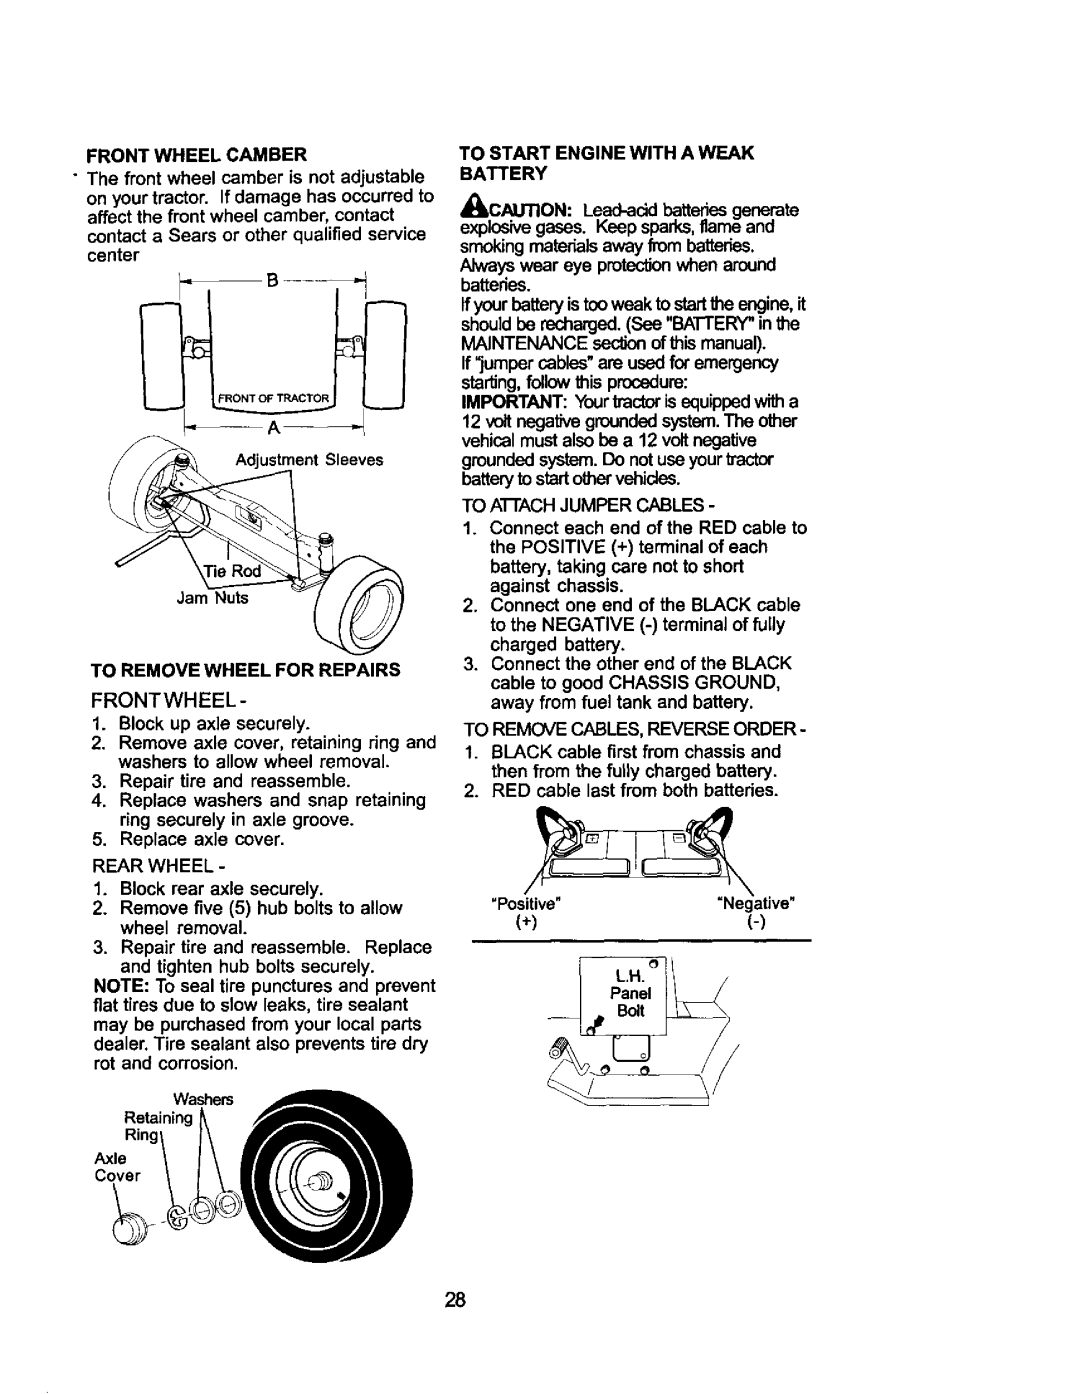 Craftsman 917.275021 manual Frontwheelcamber, Positive=Negative 